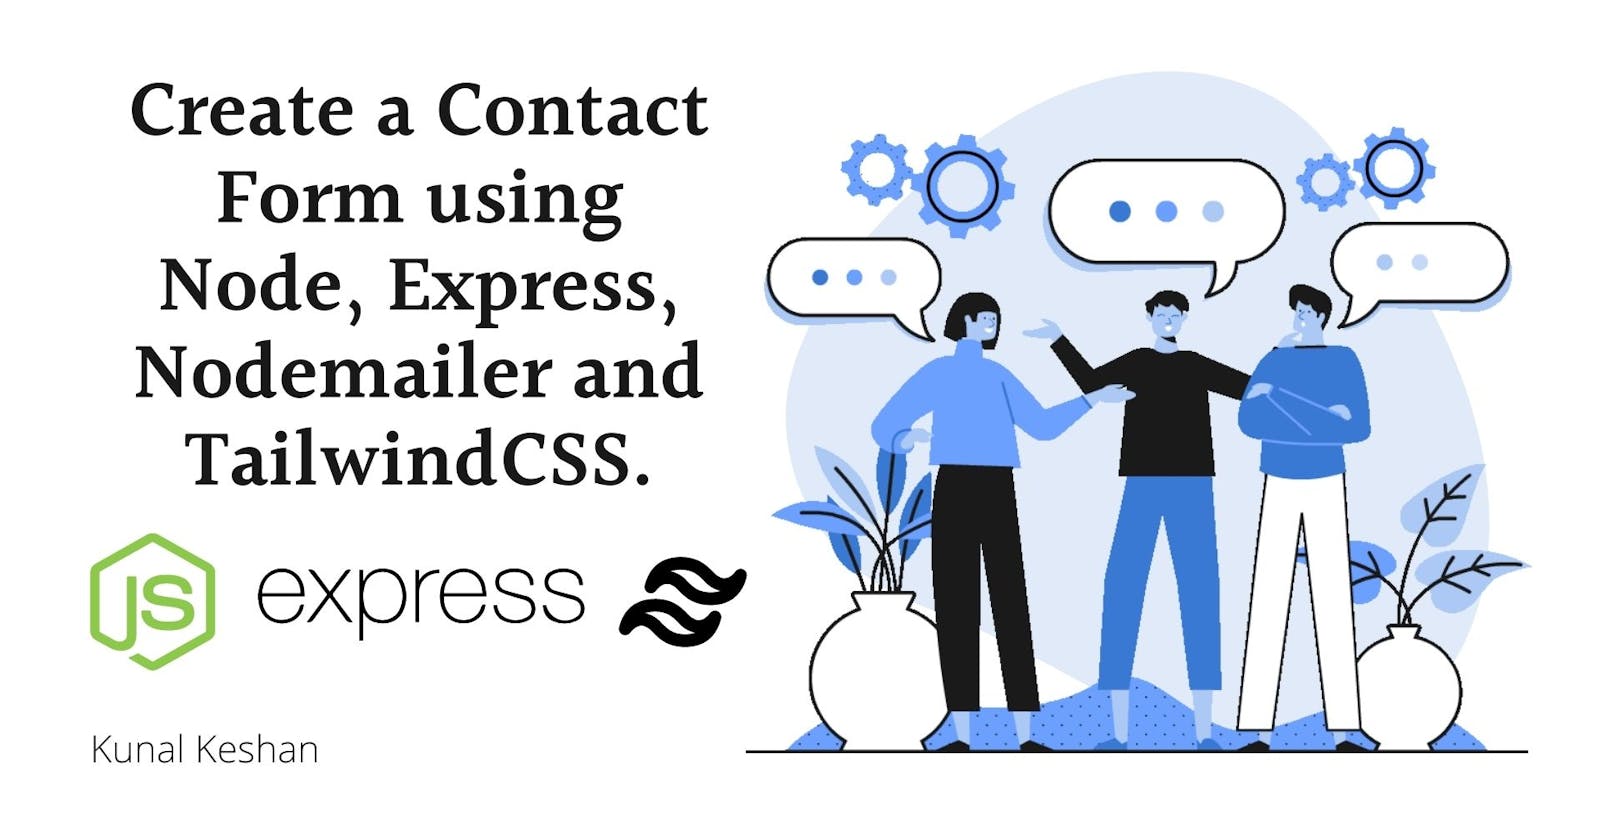 Create a Contact Form with Node, Express, Nodemailer, and TailwindCSS.